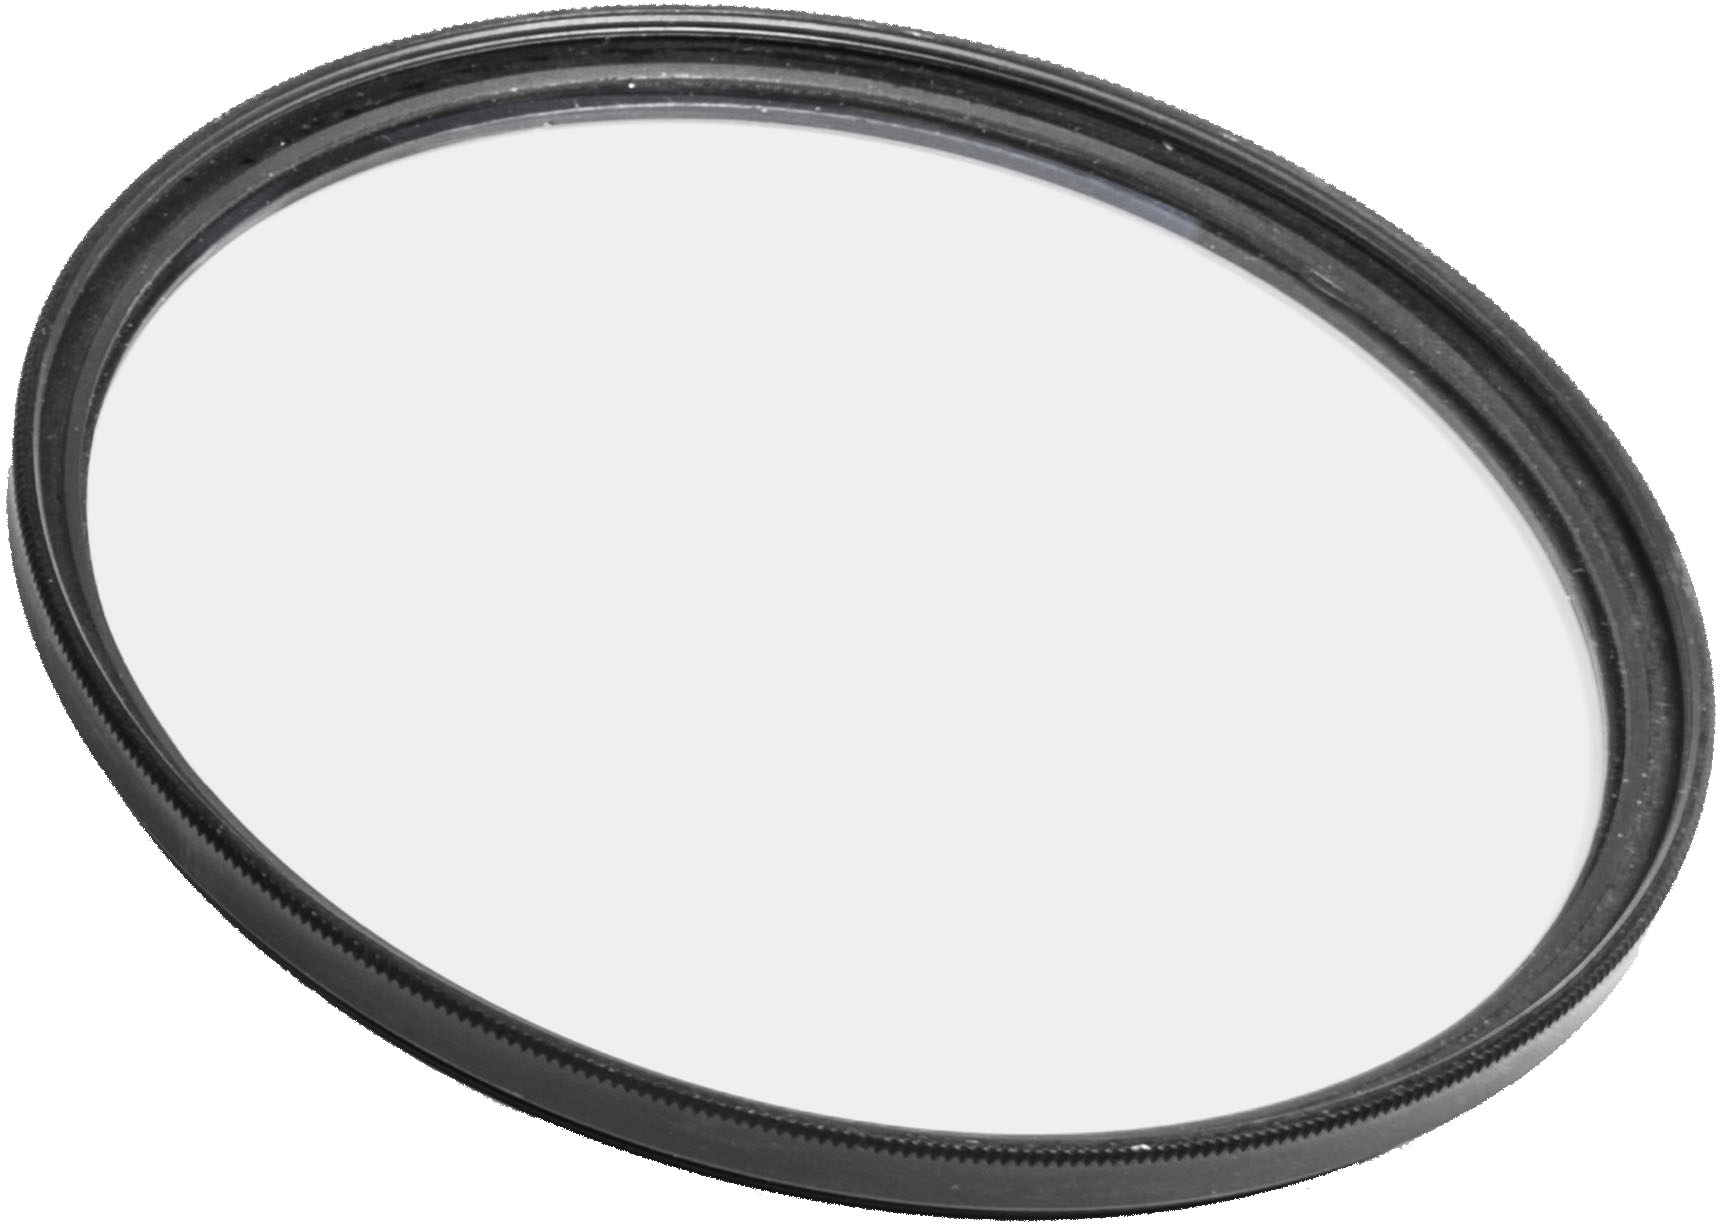 Angle View: Sunpak - Circle 77mm Ultraviolet Lens Filter